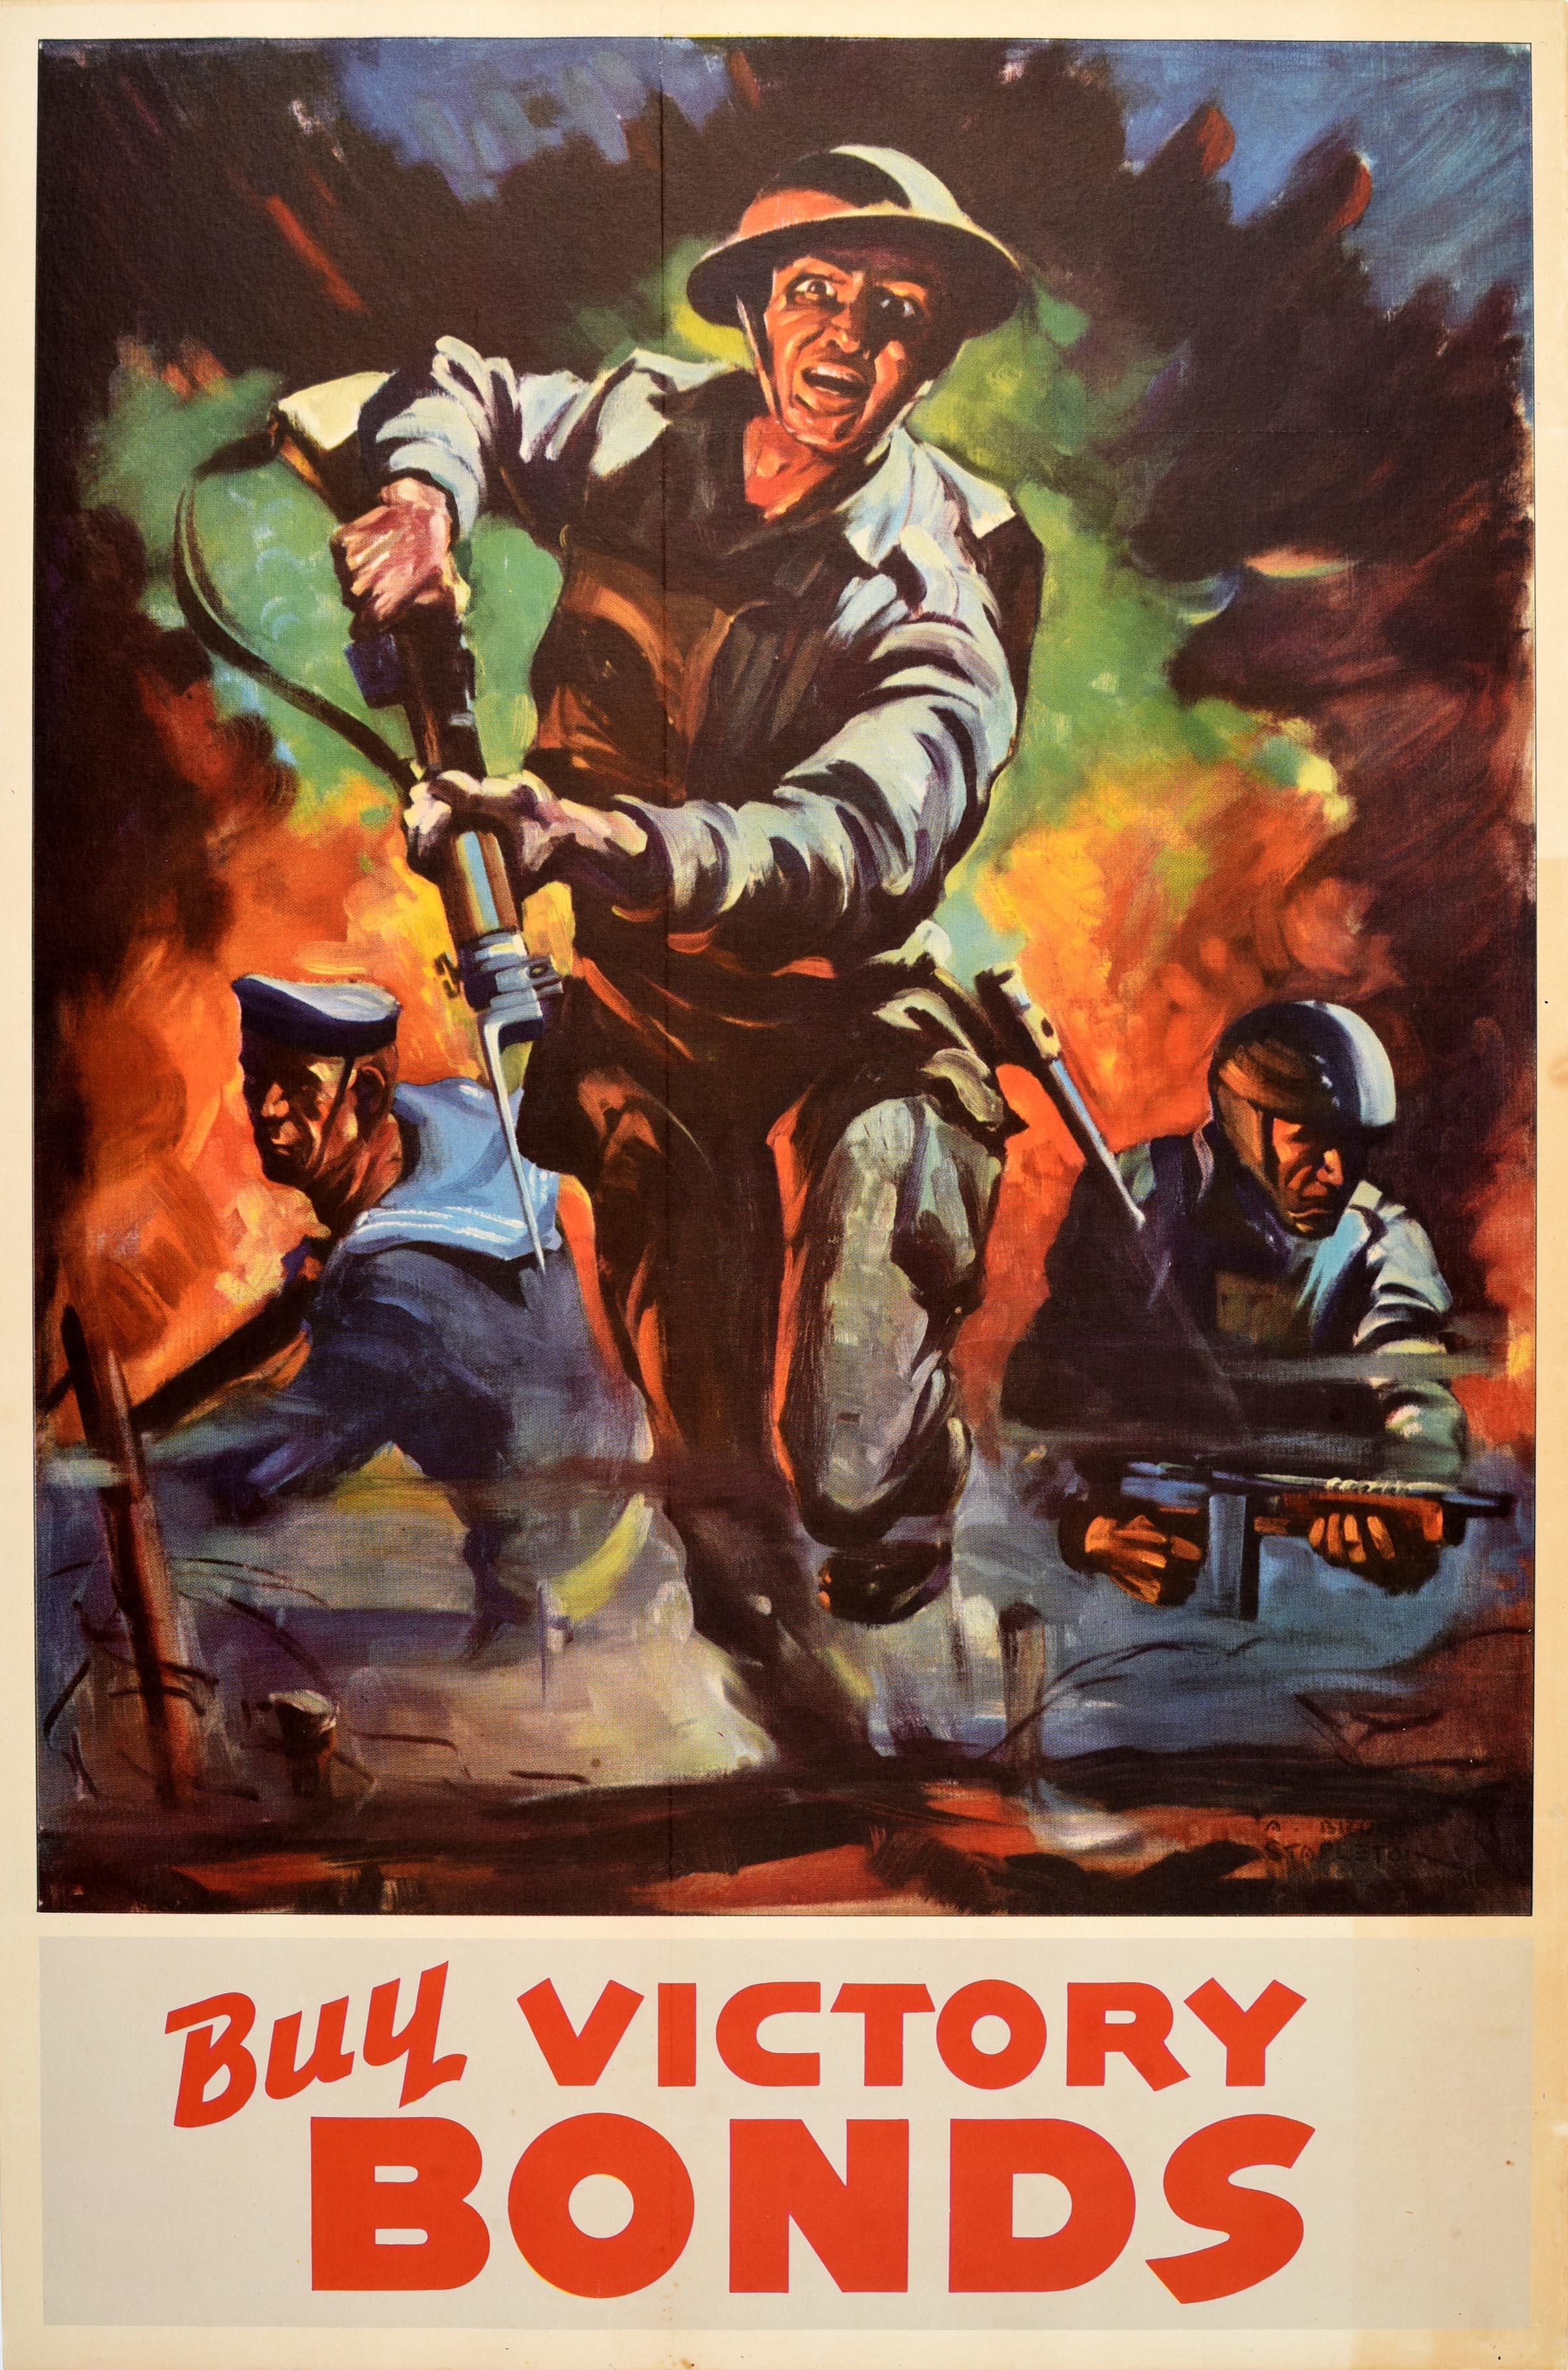 Unknown Print - Original Vintage World War Two Poster Buy Victory Bonds WWII Soldier Sailor Navy